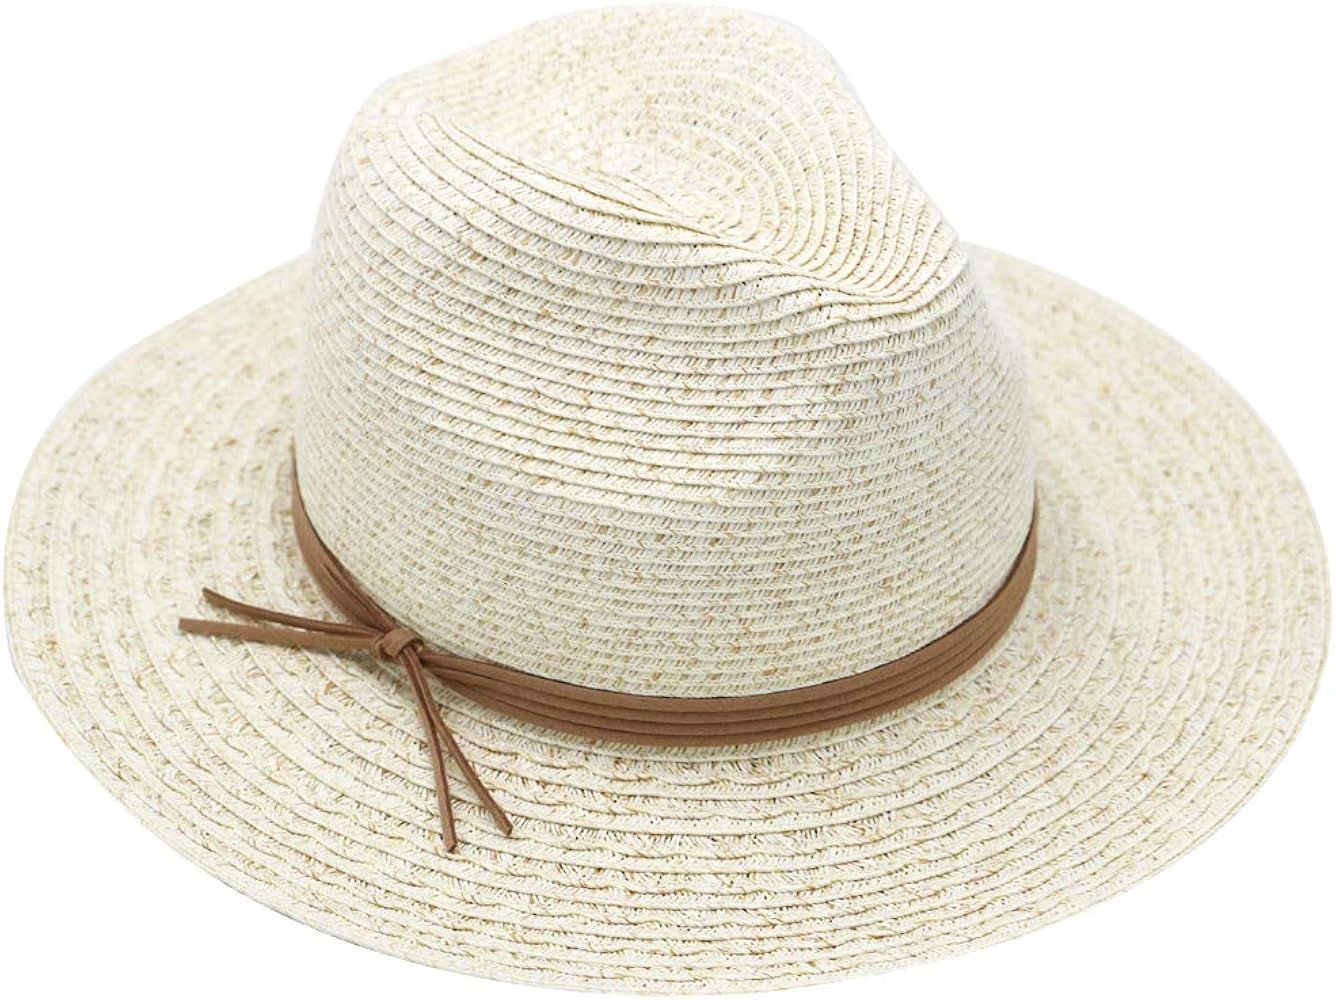 MORSTYLE Women Wide Brim Straw Panama Fedora Summer Beach Sun Hat UPF50+ Adjustable | Amazon (US)